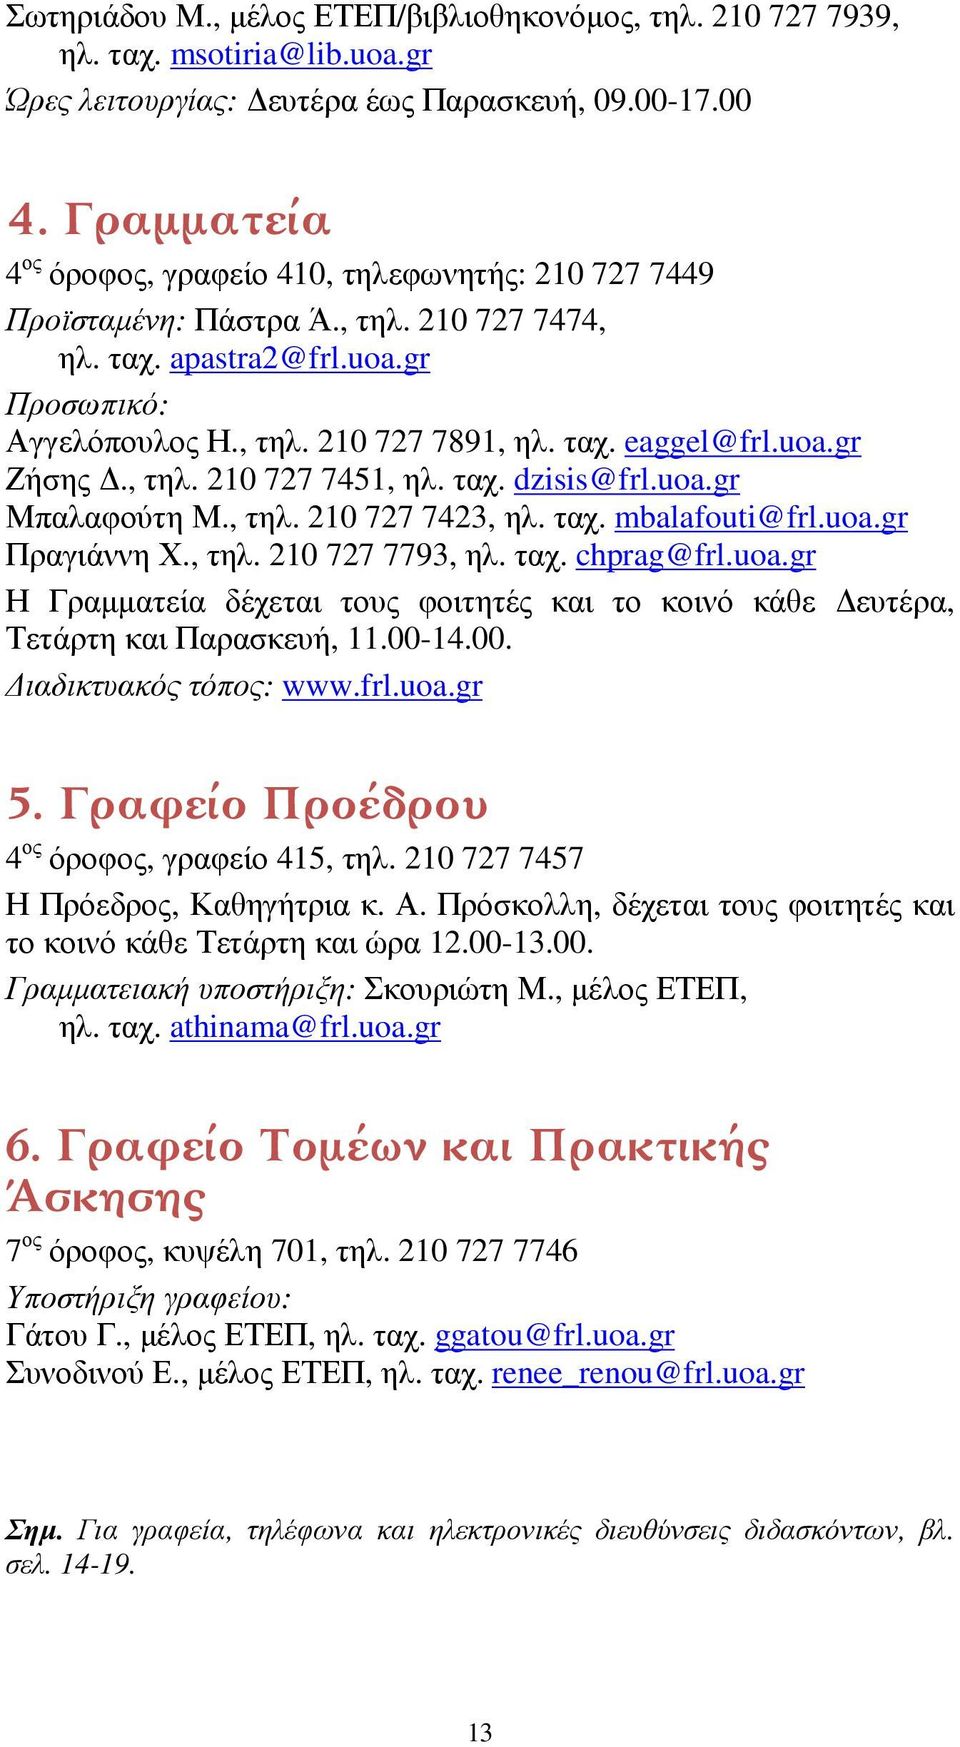 uoa.gr Ζήσης Δ., τηλ. 210 727 7451, ηλ. ταχ. dzisis@frl.uoa.gr Μπαλαφούτη Μ., τηλ. 210 727 7423, ηλ. ταχ. mbalafouti@frl.uoa.gr Πραγιάννη Χ., τηλ. 210 727 7793, ηλ. ταχ. chprag@frl.uoa.gr Η Γραμματεία δέχεται τους φοιτητές και το κοινό κάθε Δευτέρα, Τετάρτη και Παρασκευή, 11.